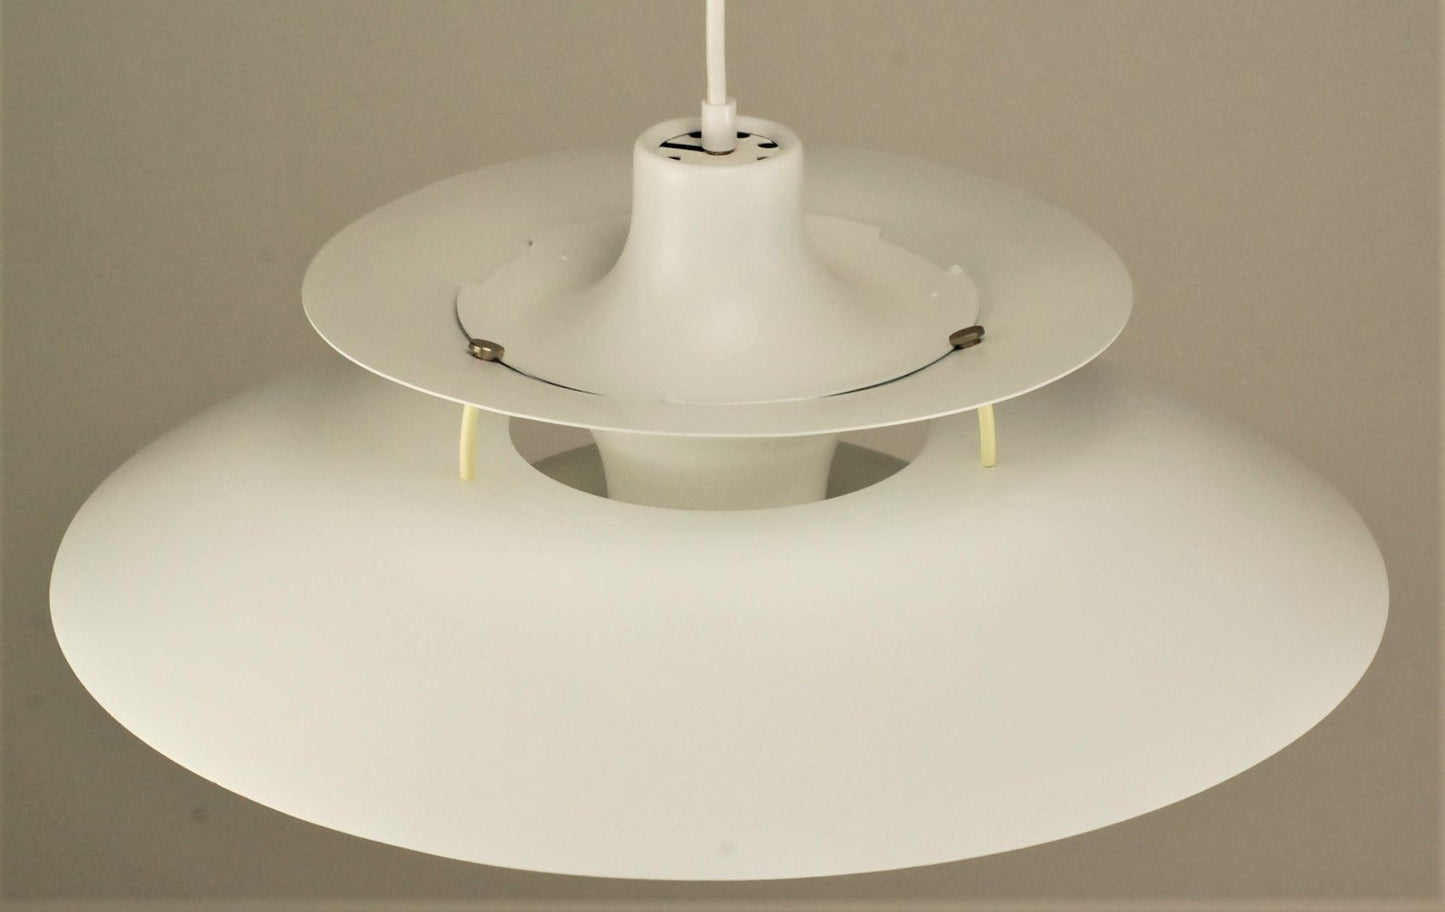 Custom Louis Poulsen PH5 Pendant Light - Design by Poul Henningsen | 'white with turquoise anti glare ring' - FancyVintage.nl -